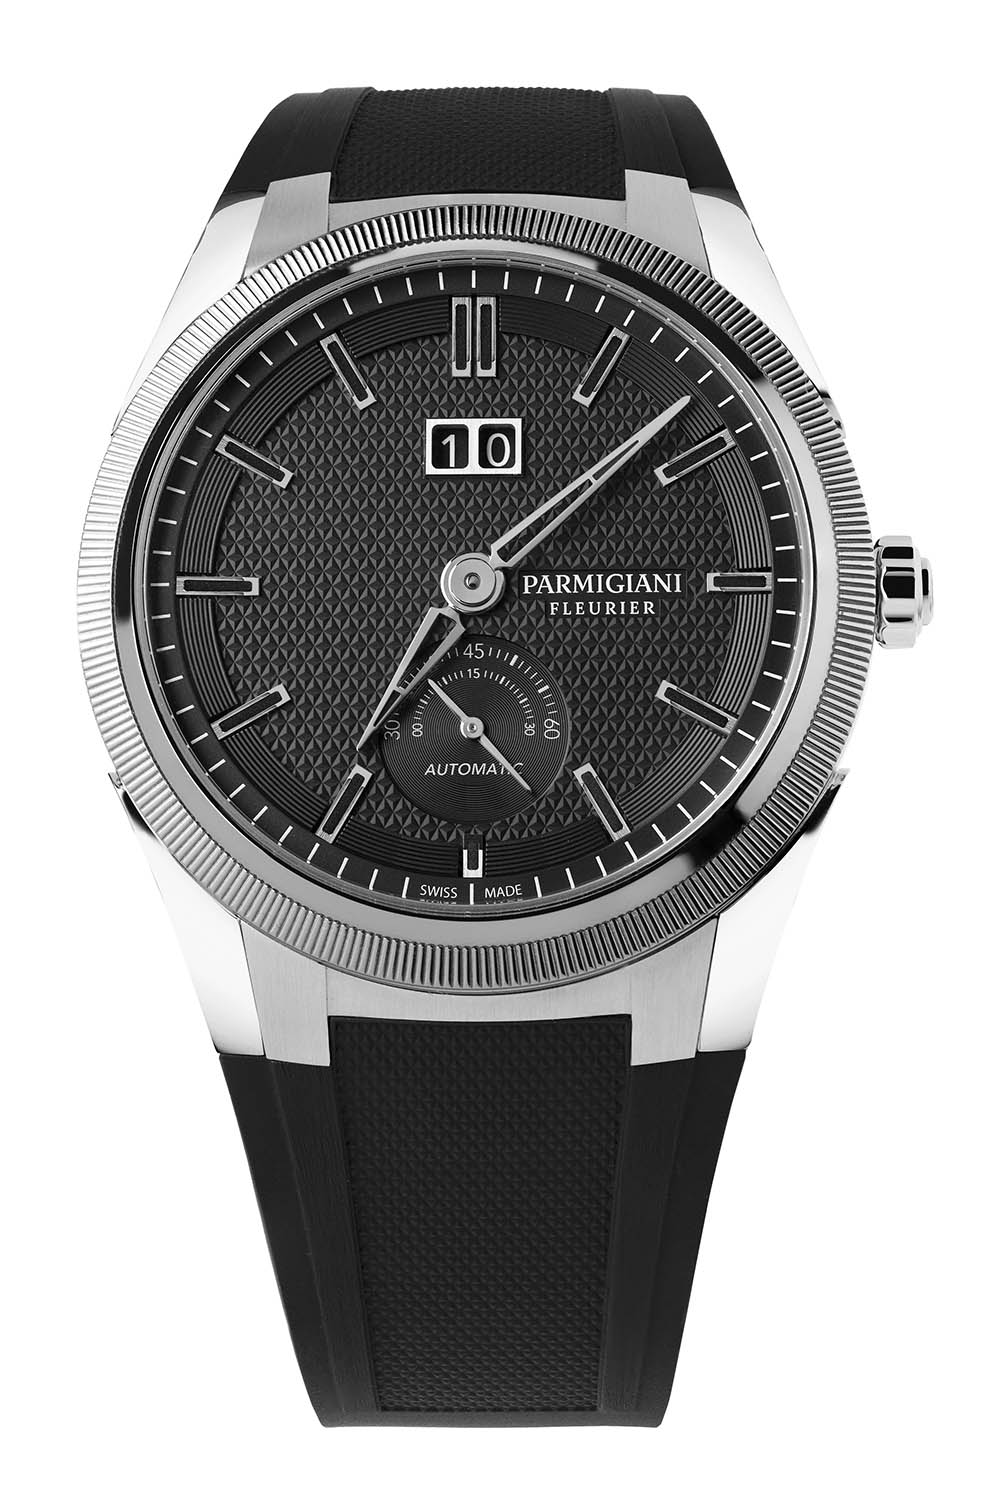 Parmigiani Fleurier Tonda GT line 2020 luxury sports watch